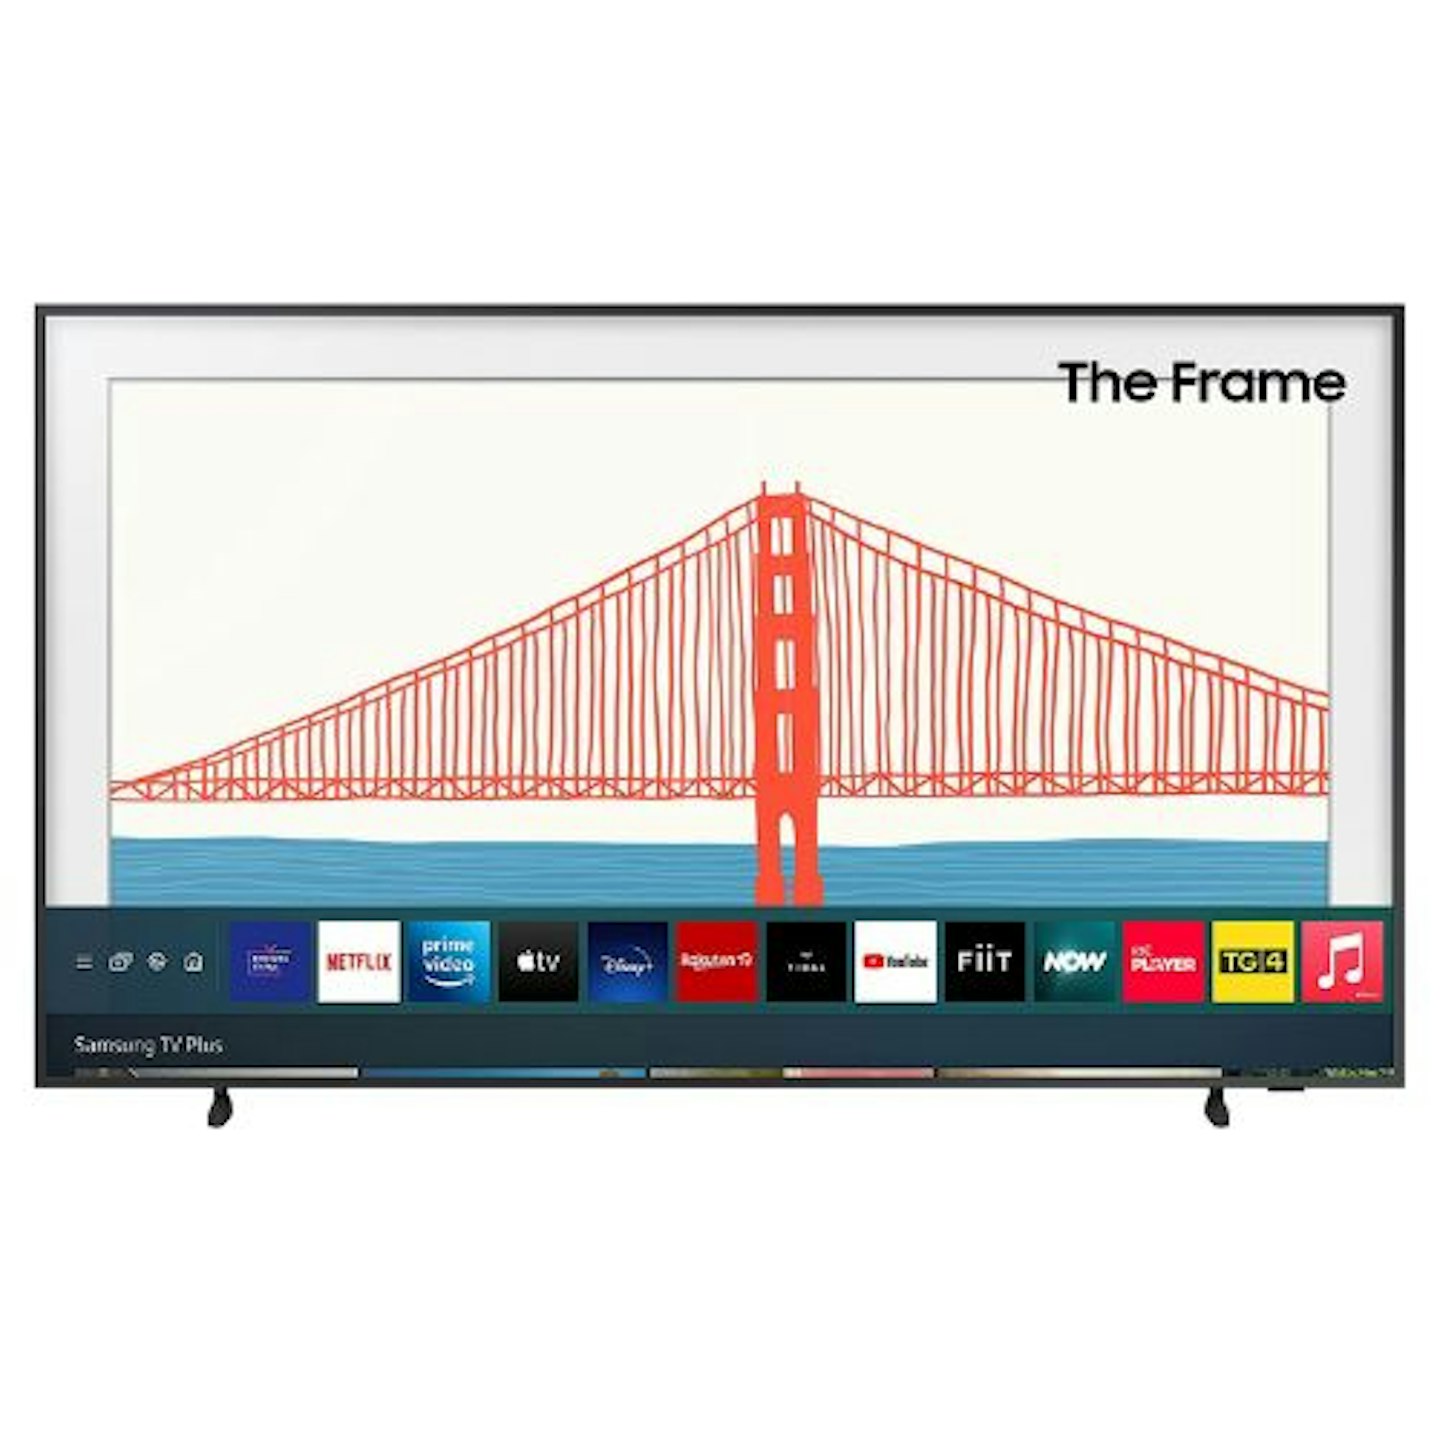 The Samsung Frame 32-Inch QLED TV